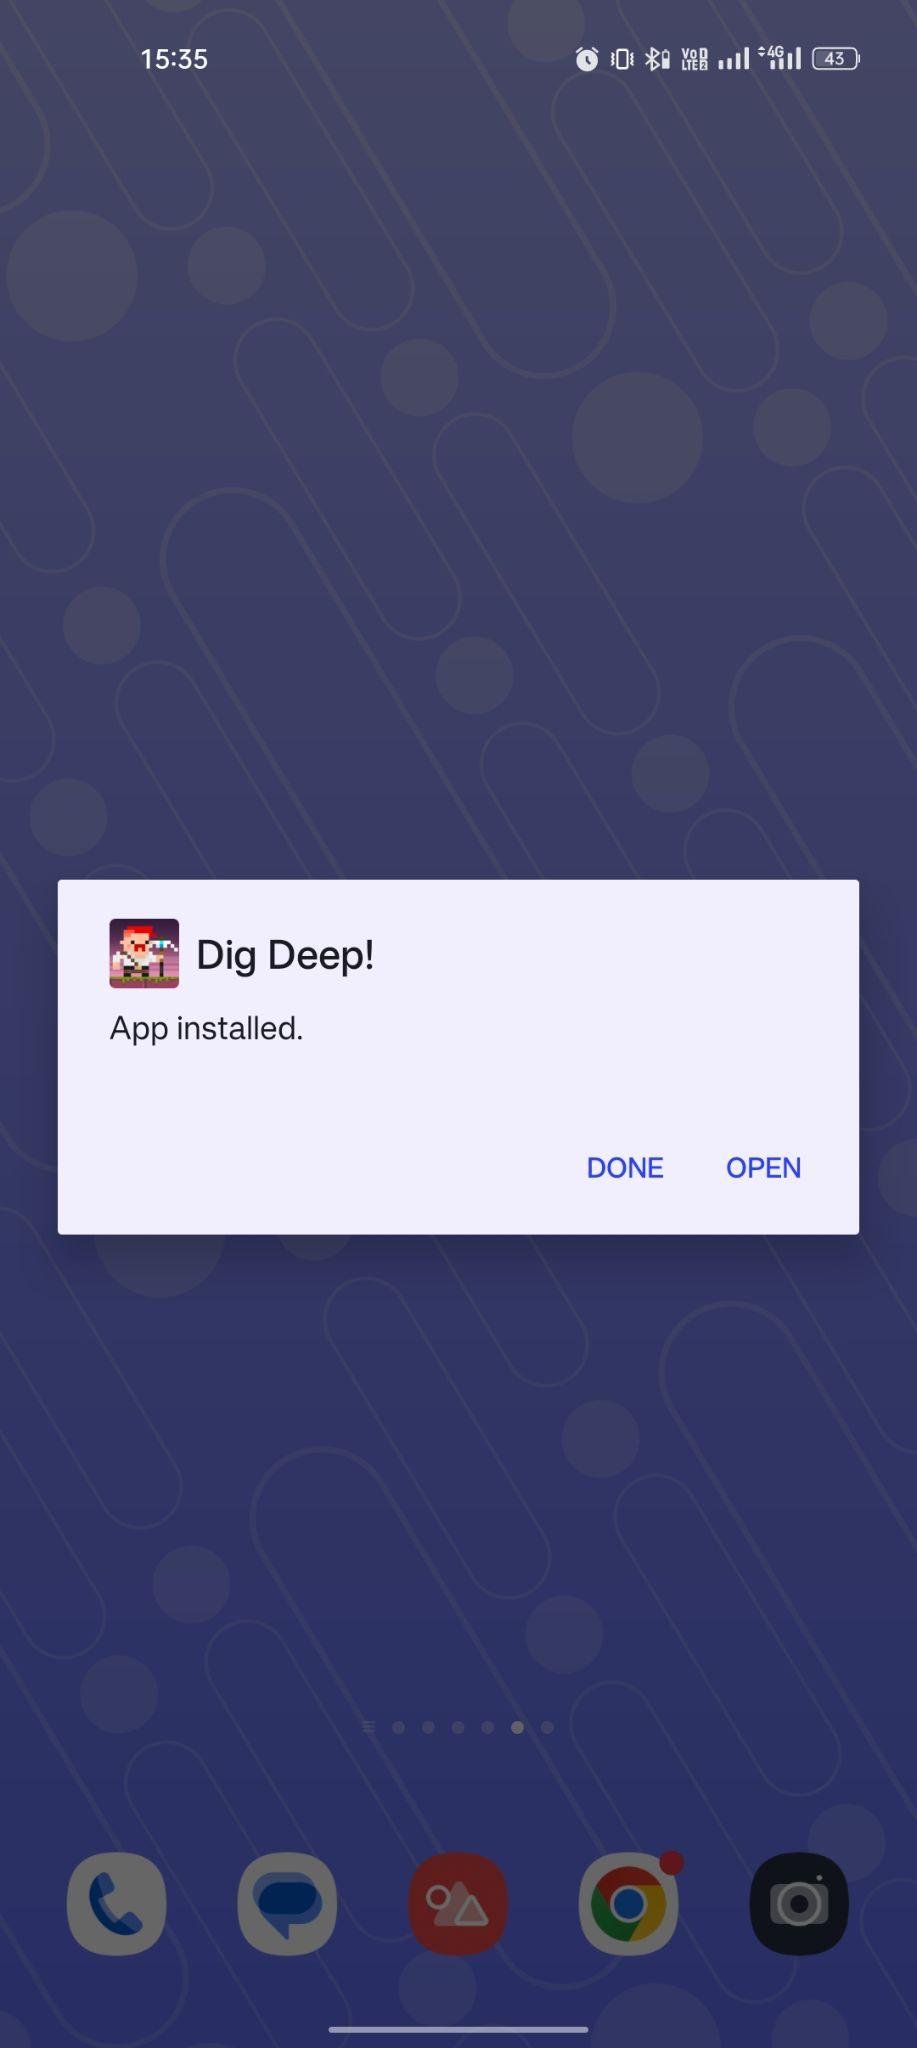 Dig Deep apk installed